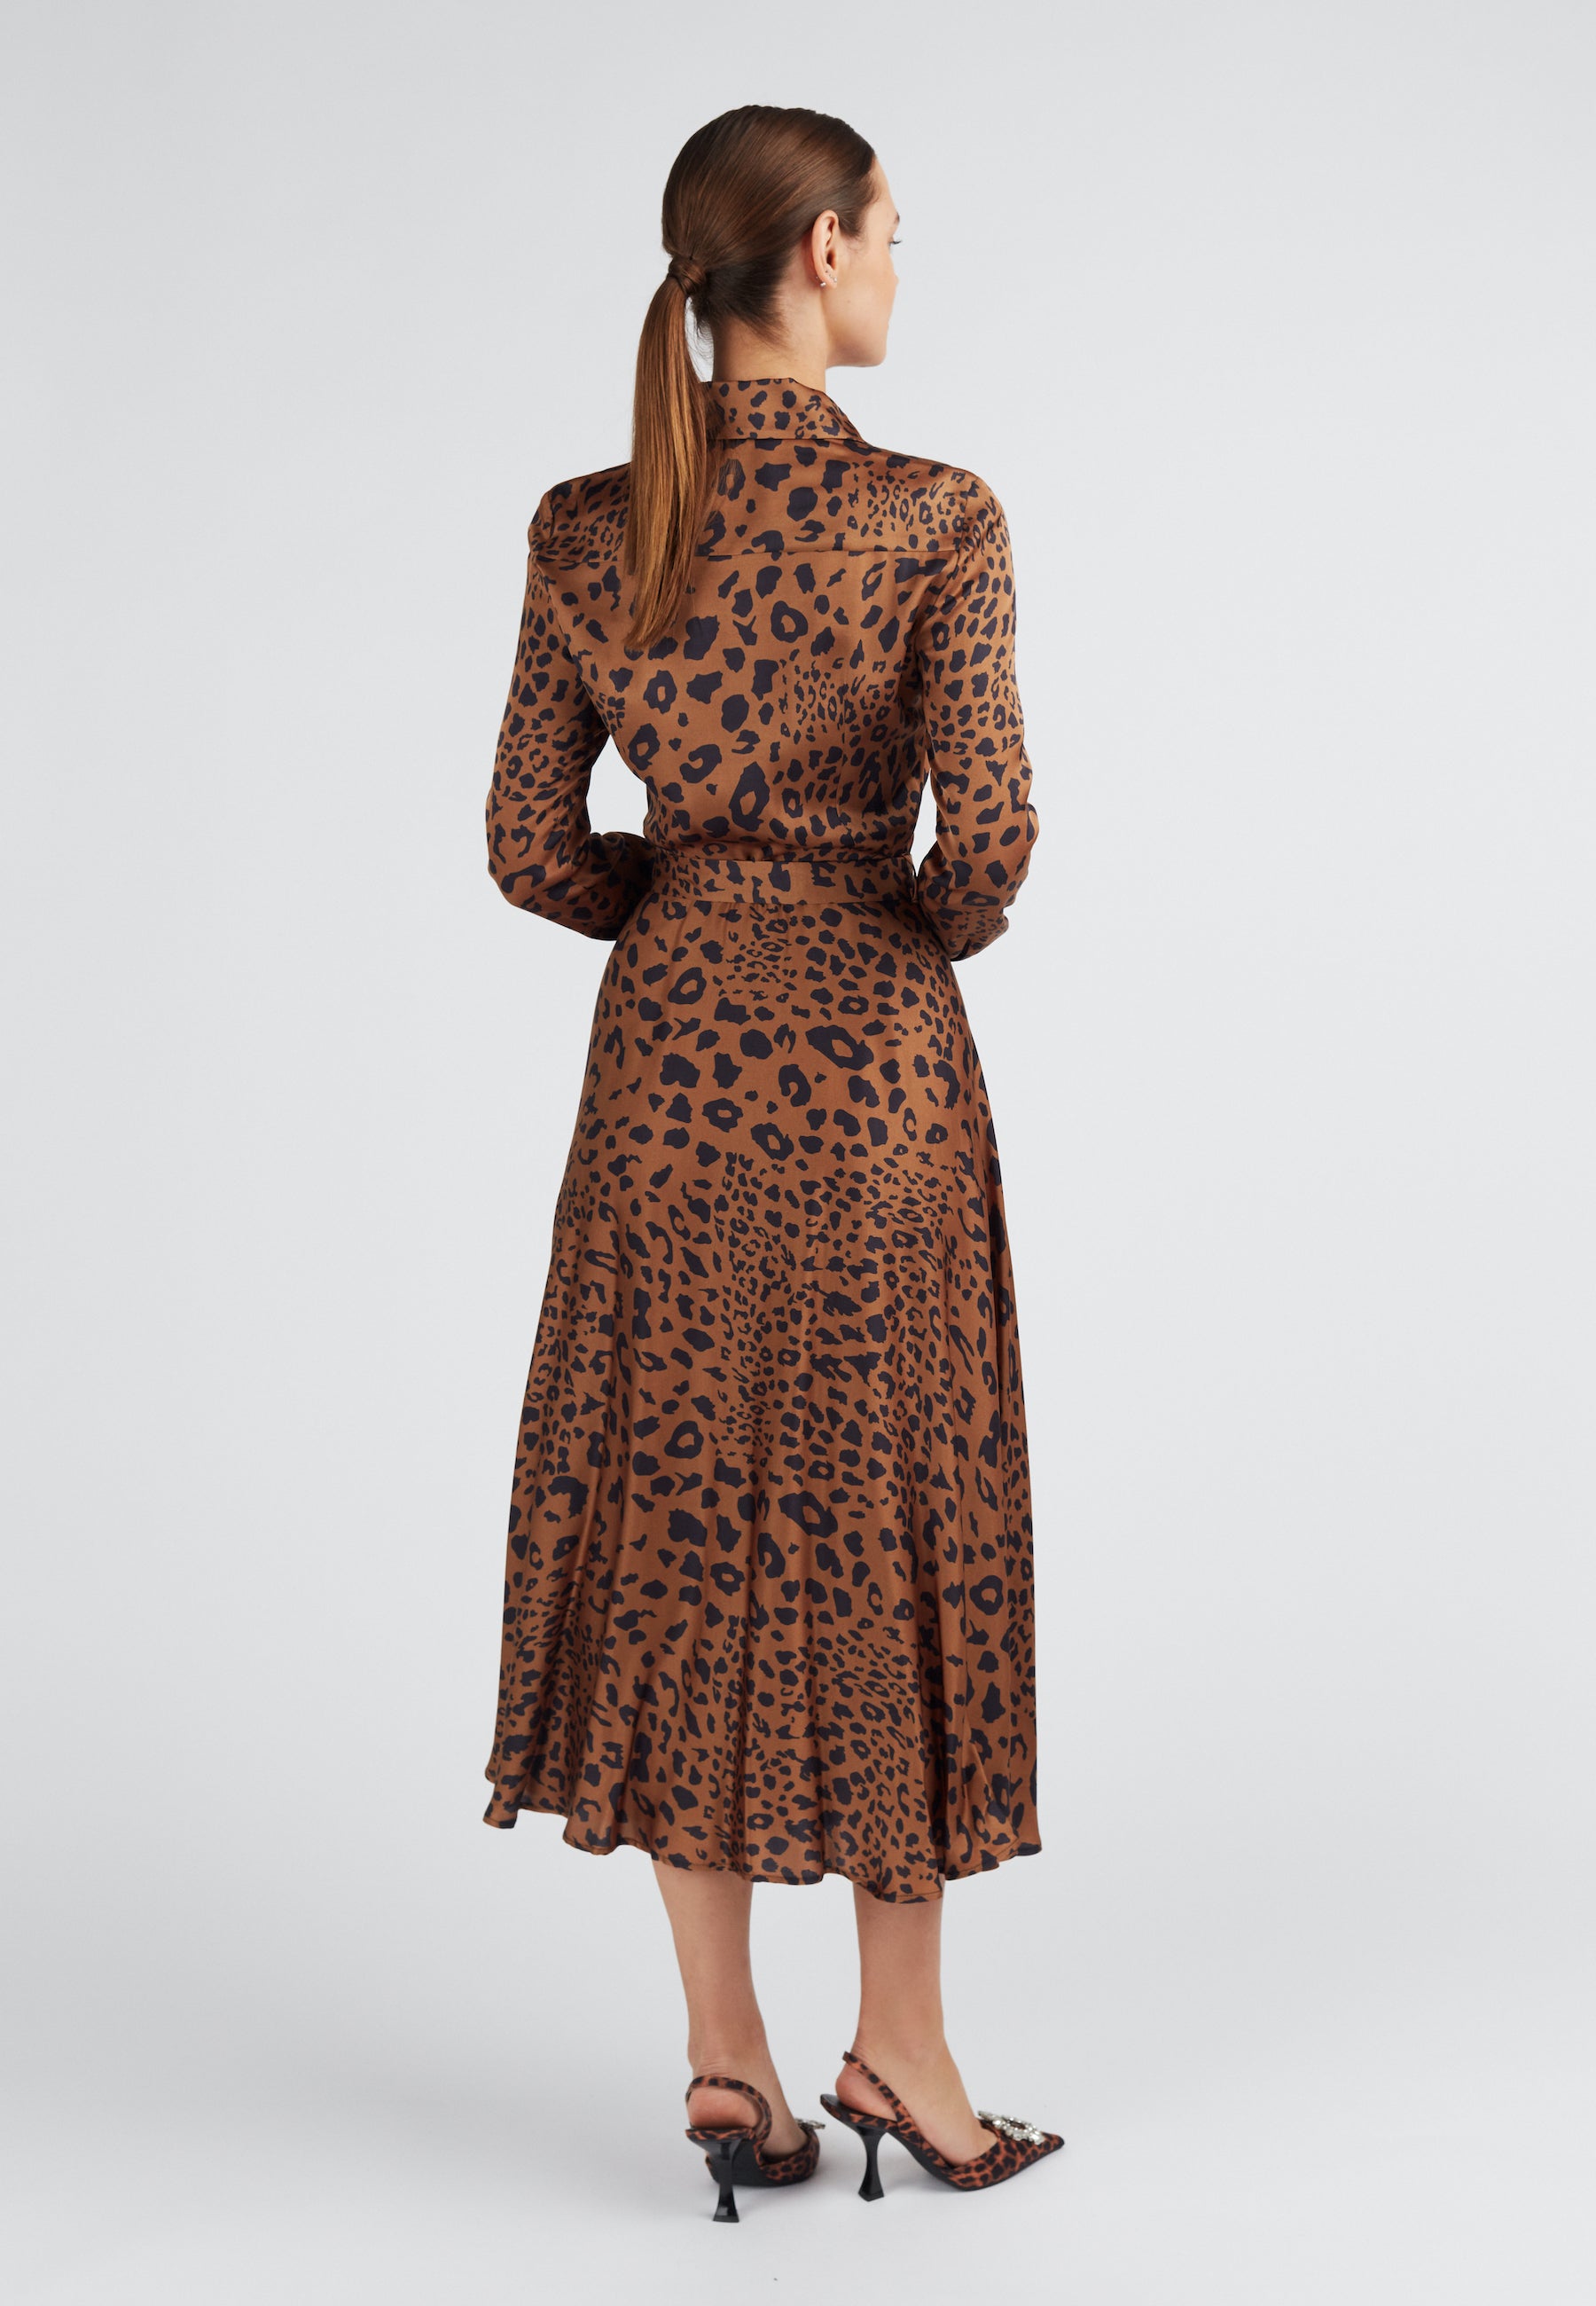 Brown black leopard shirt dress with round skirt